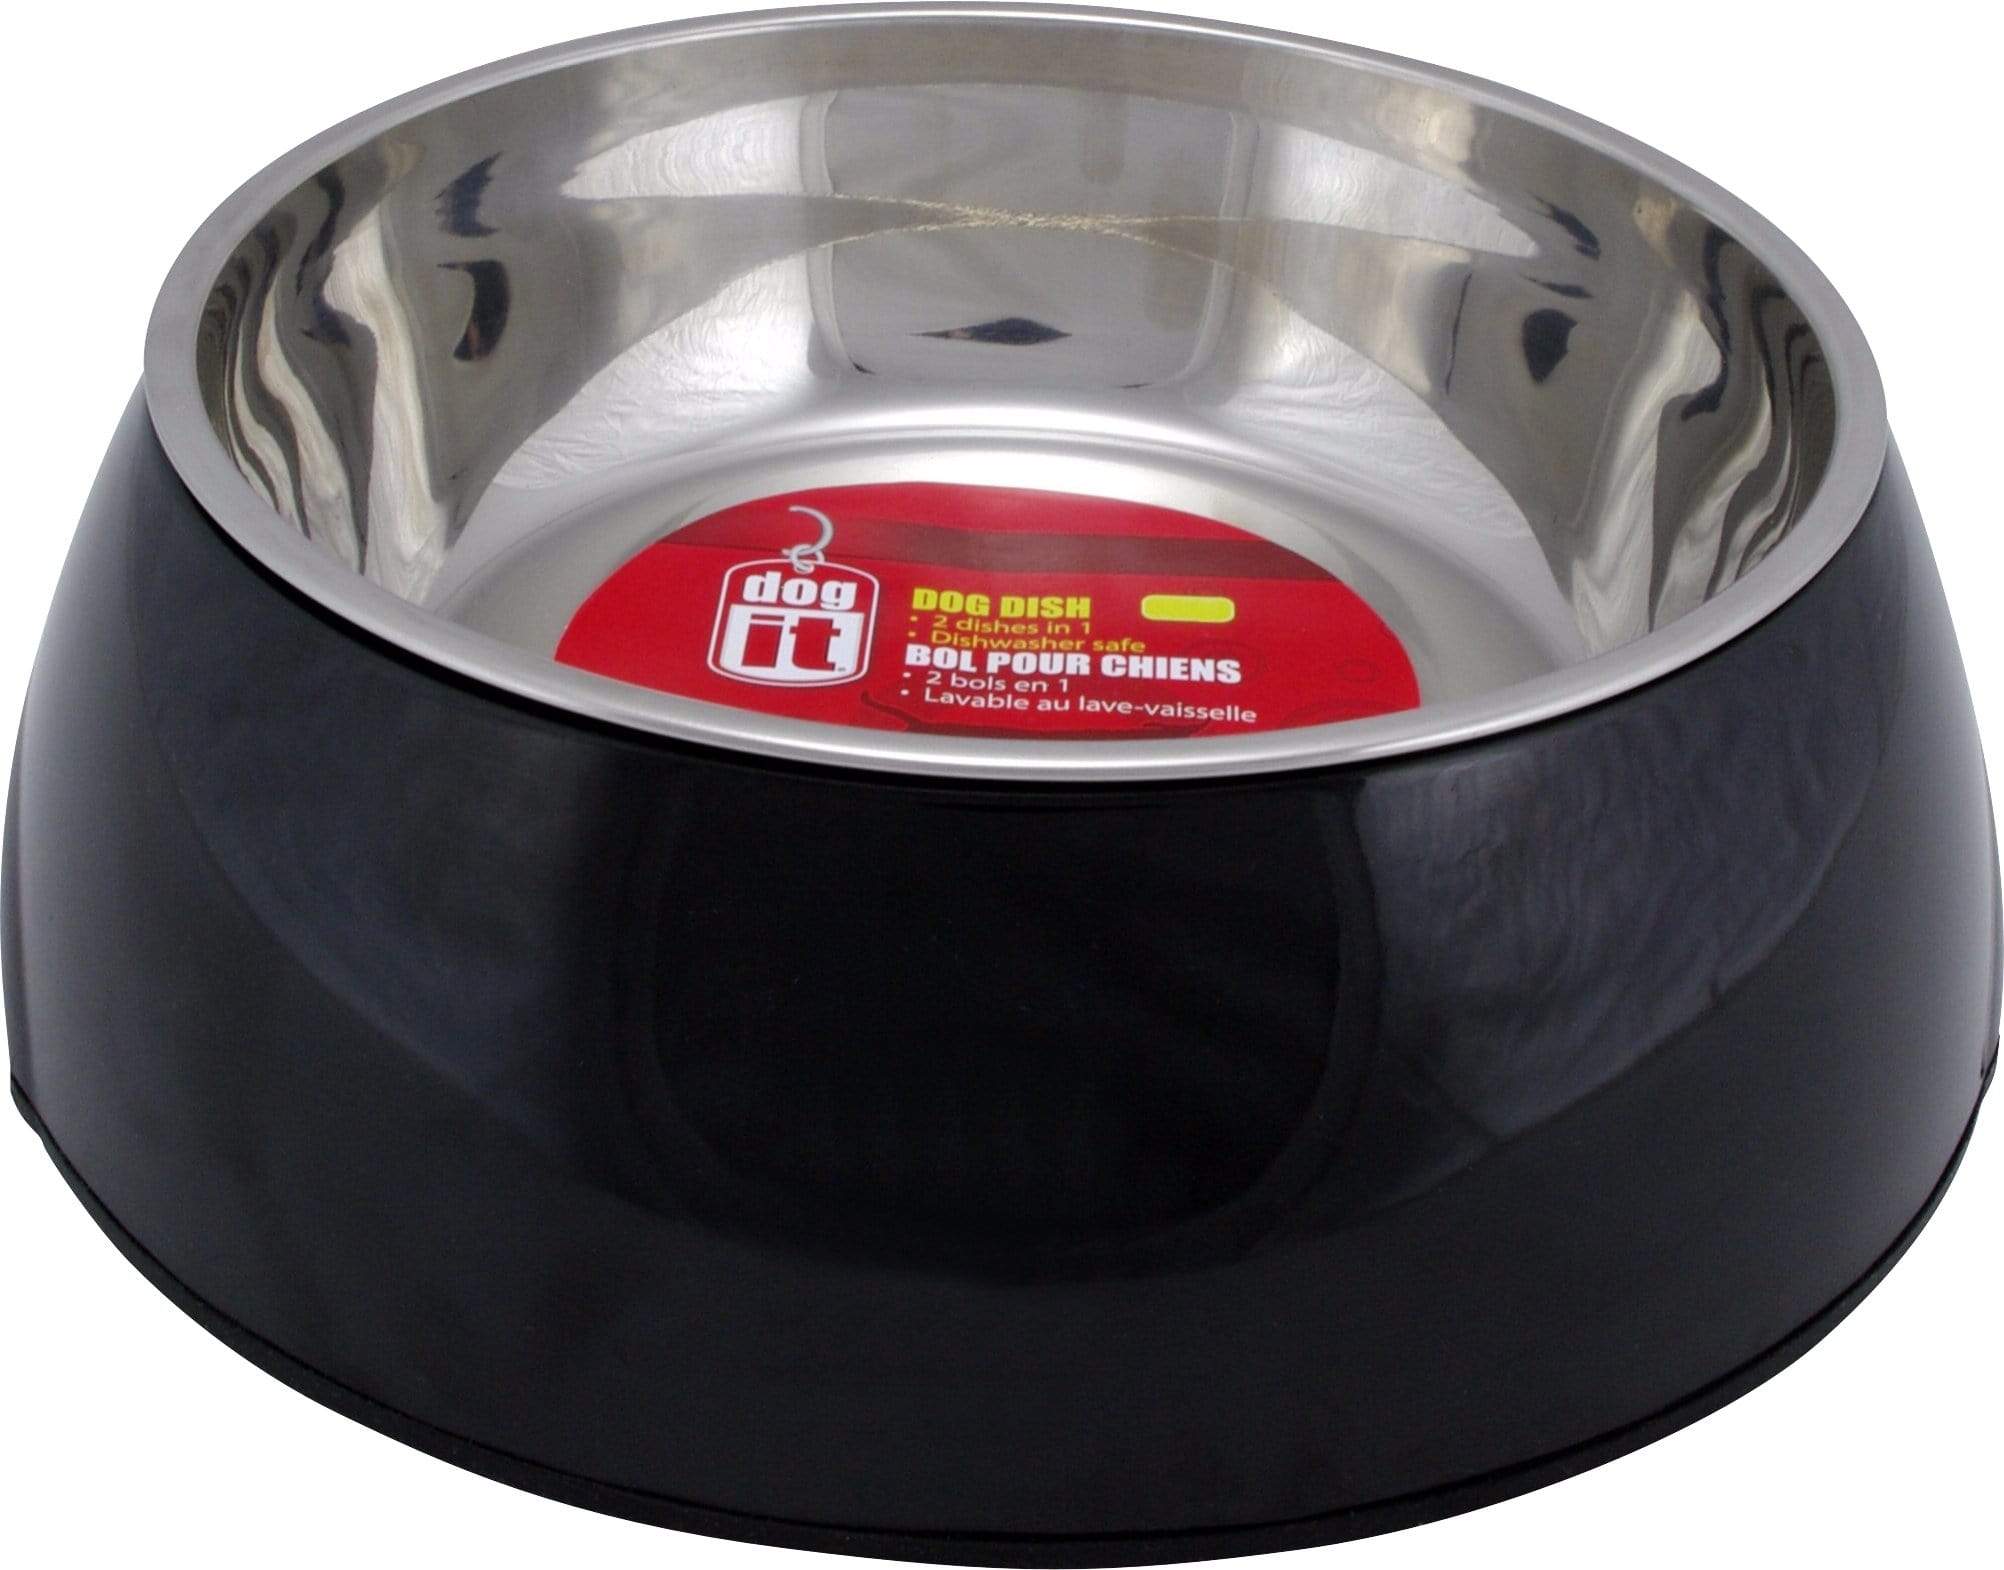 Dogit Black 2 in 1 Durable Dog Bowl